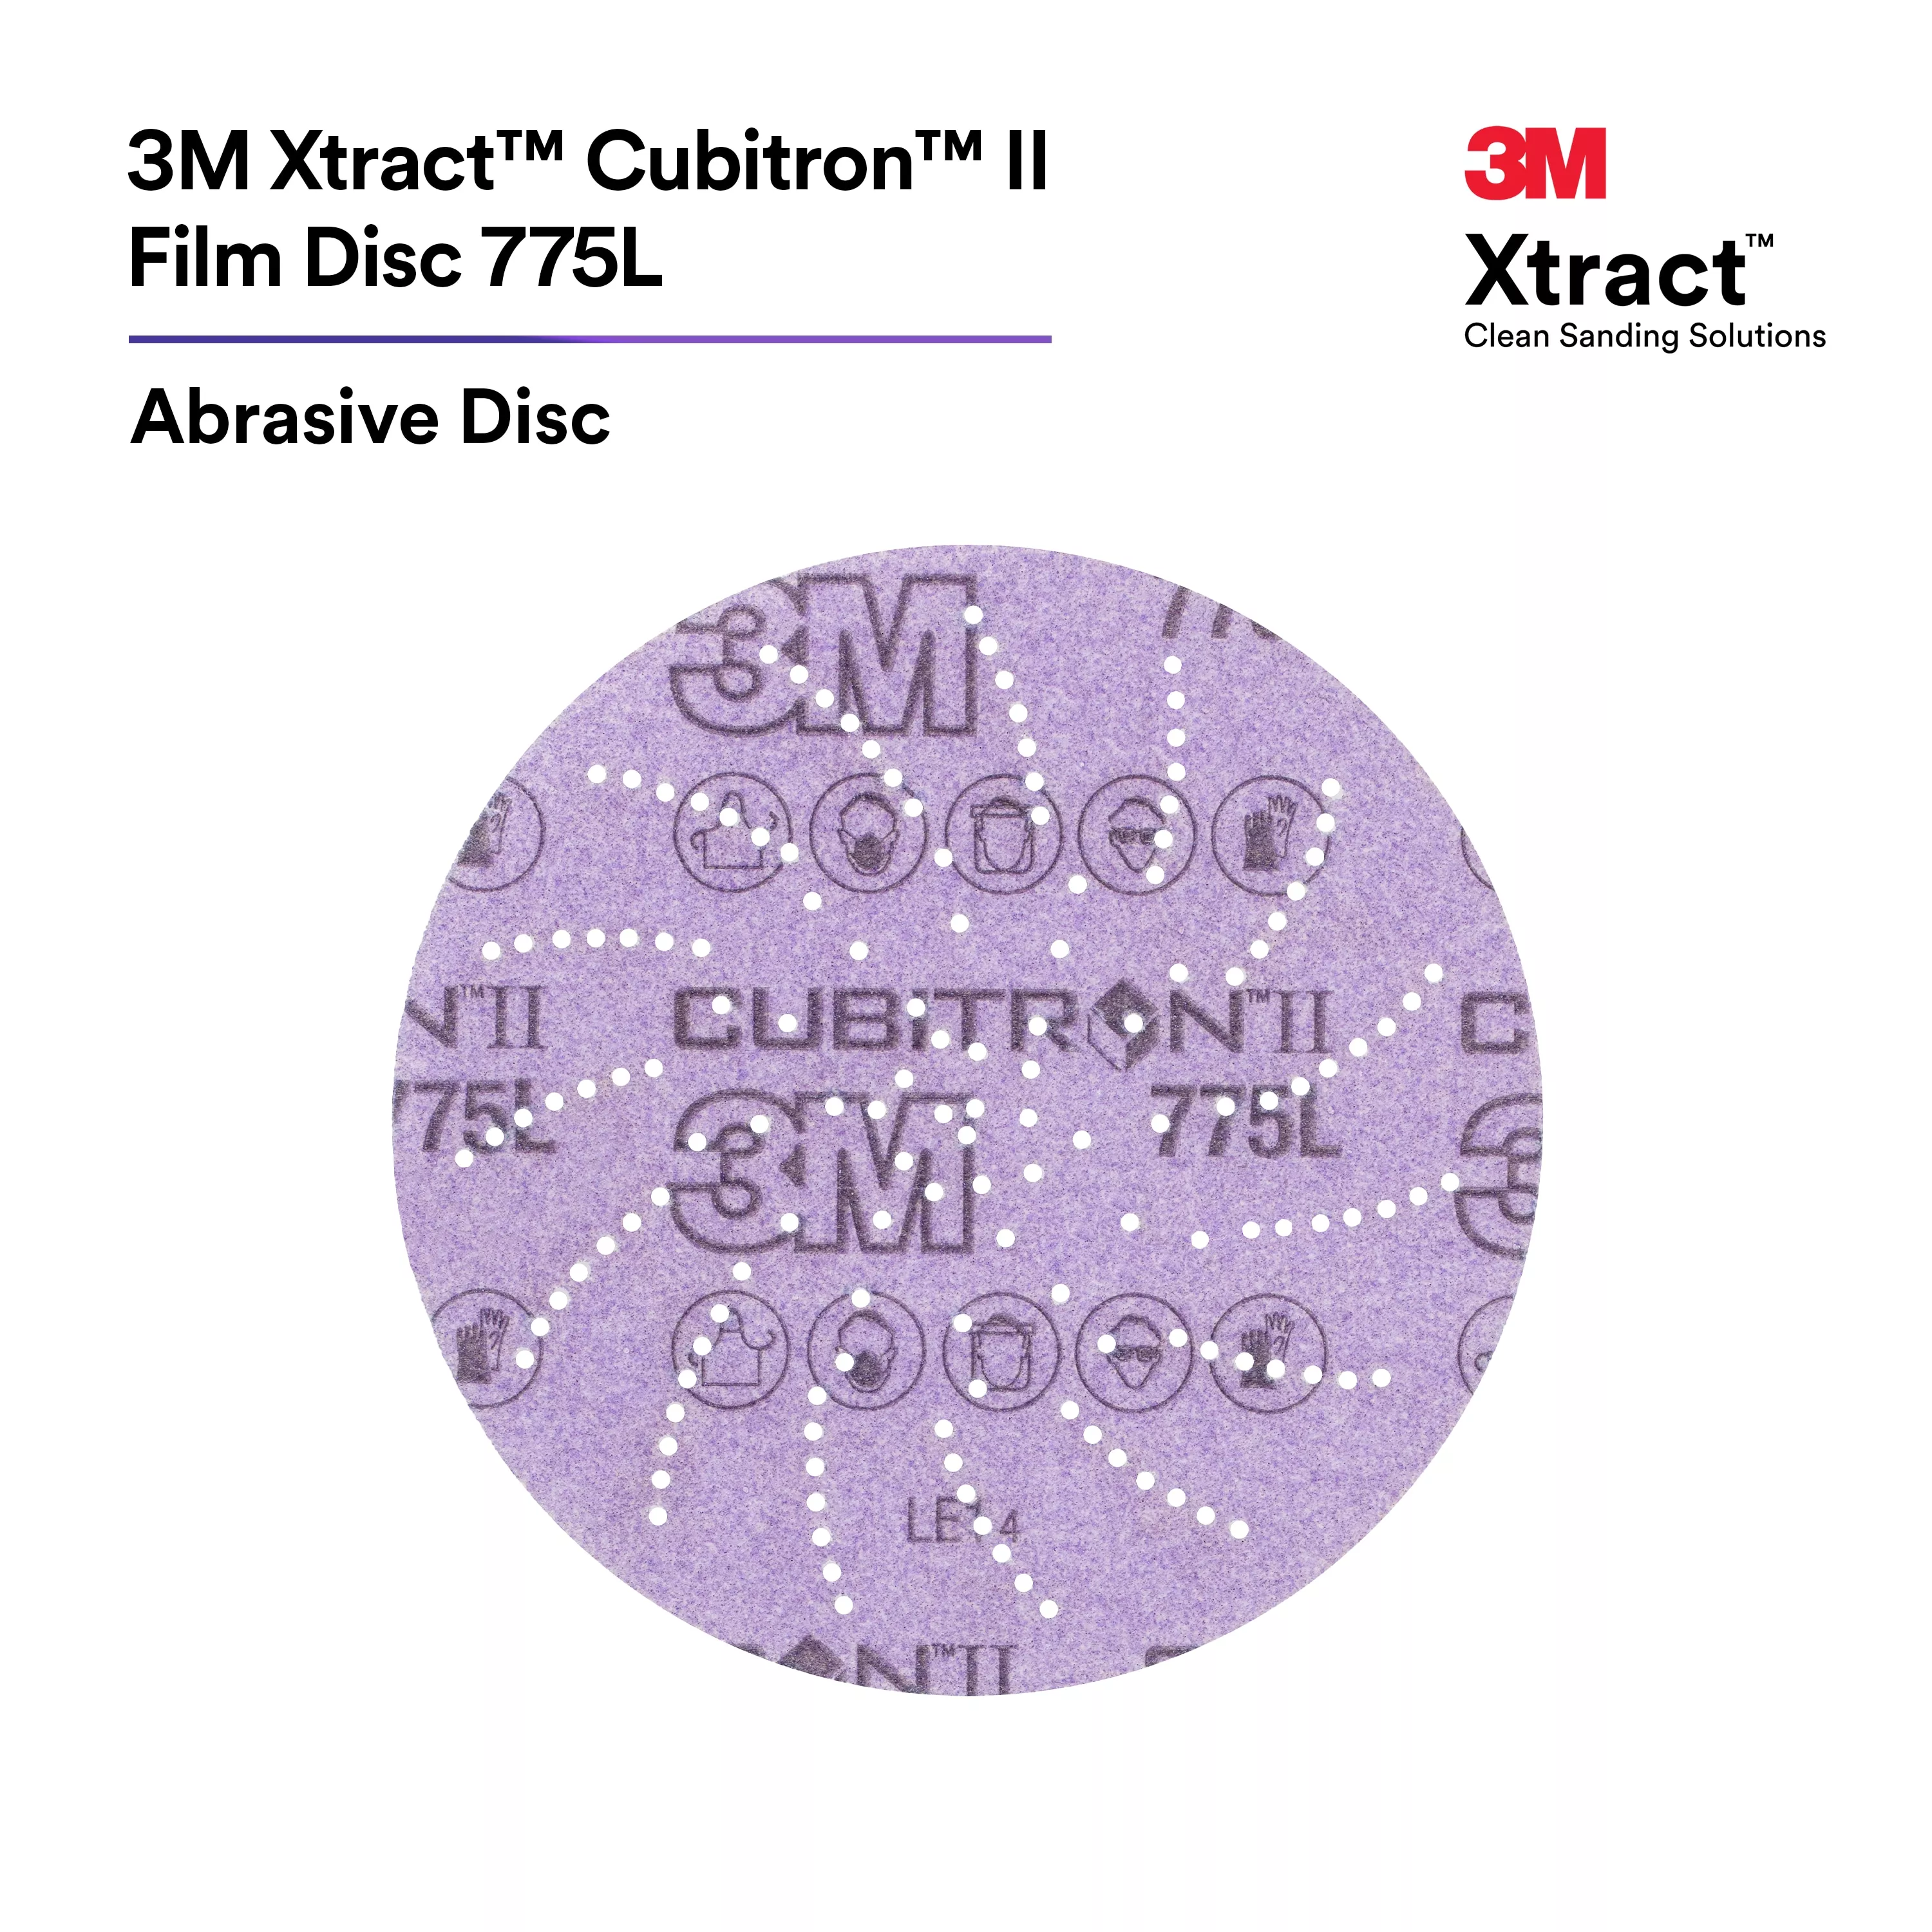 SKU 7100106717 | 3M Xtract™ Cubitron™ II Film Disc 775L